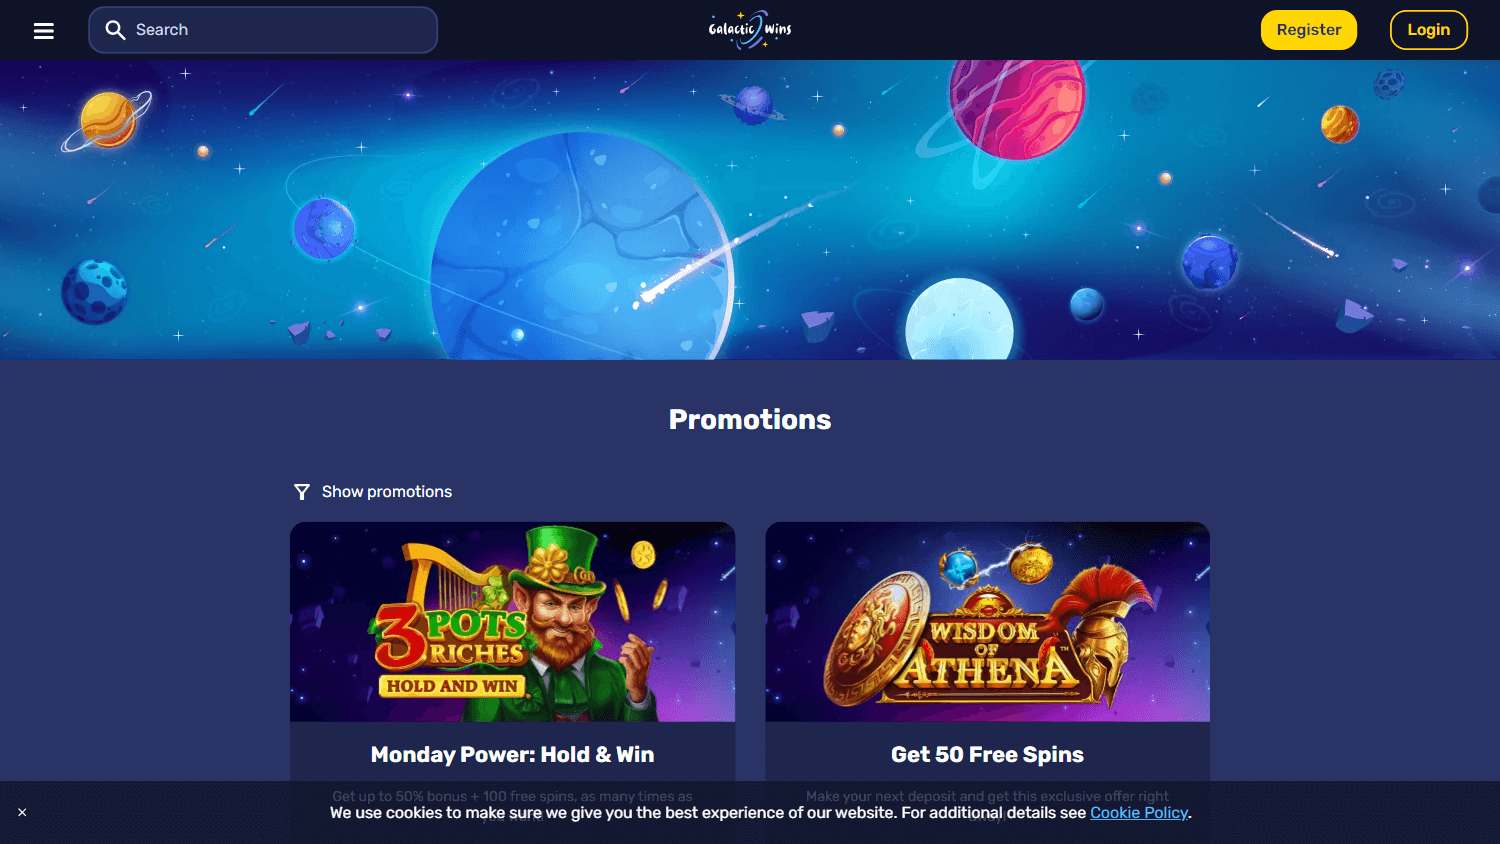 galactic_wins_casino_promotions_desktop